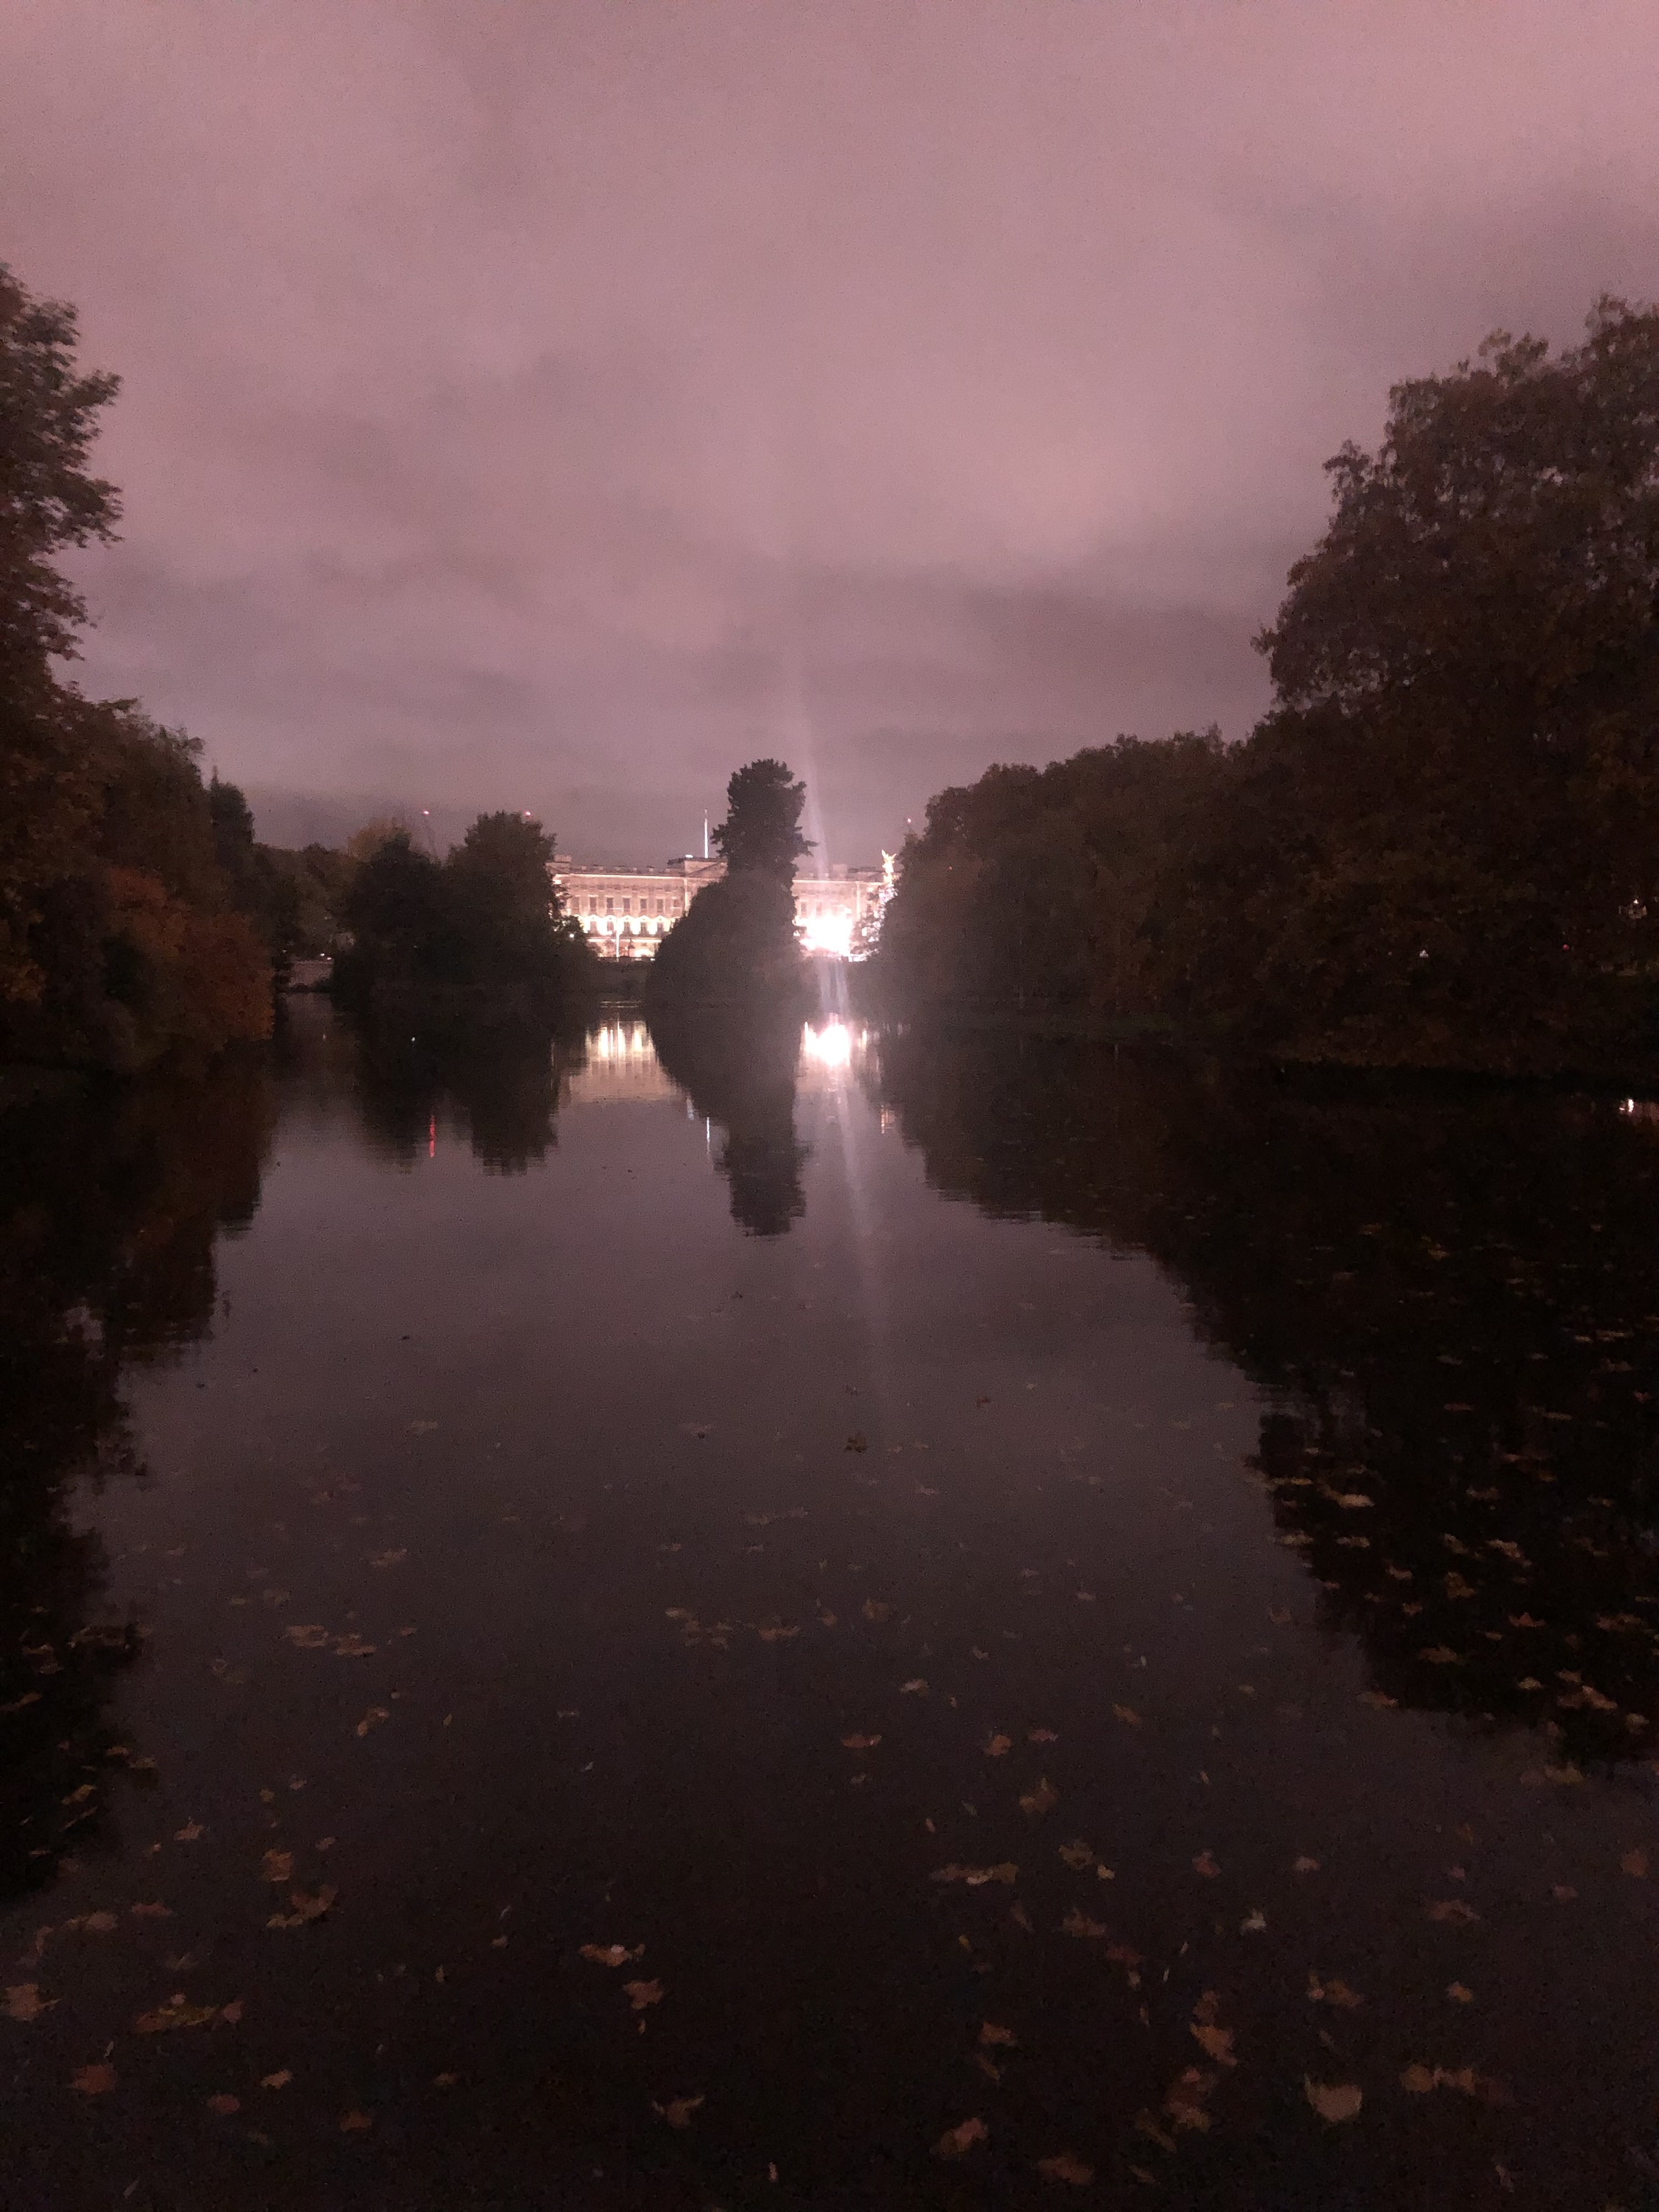 Buckingham Palace seen through a dark park in London